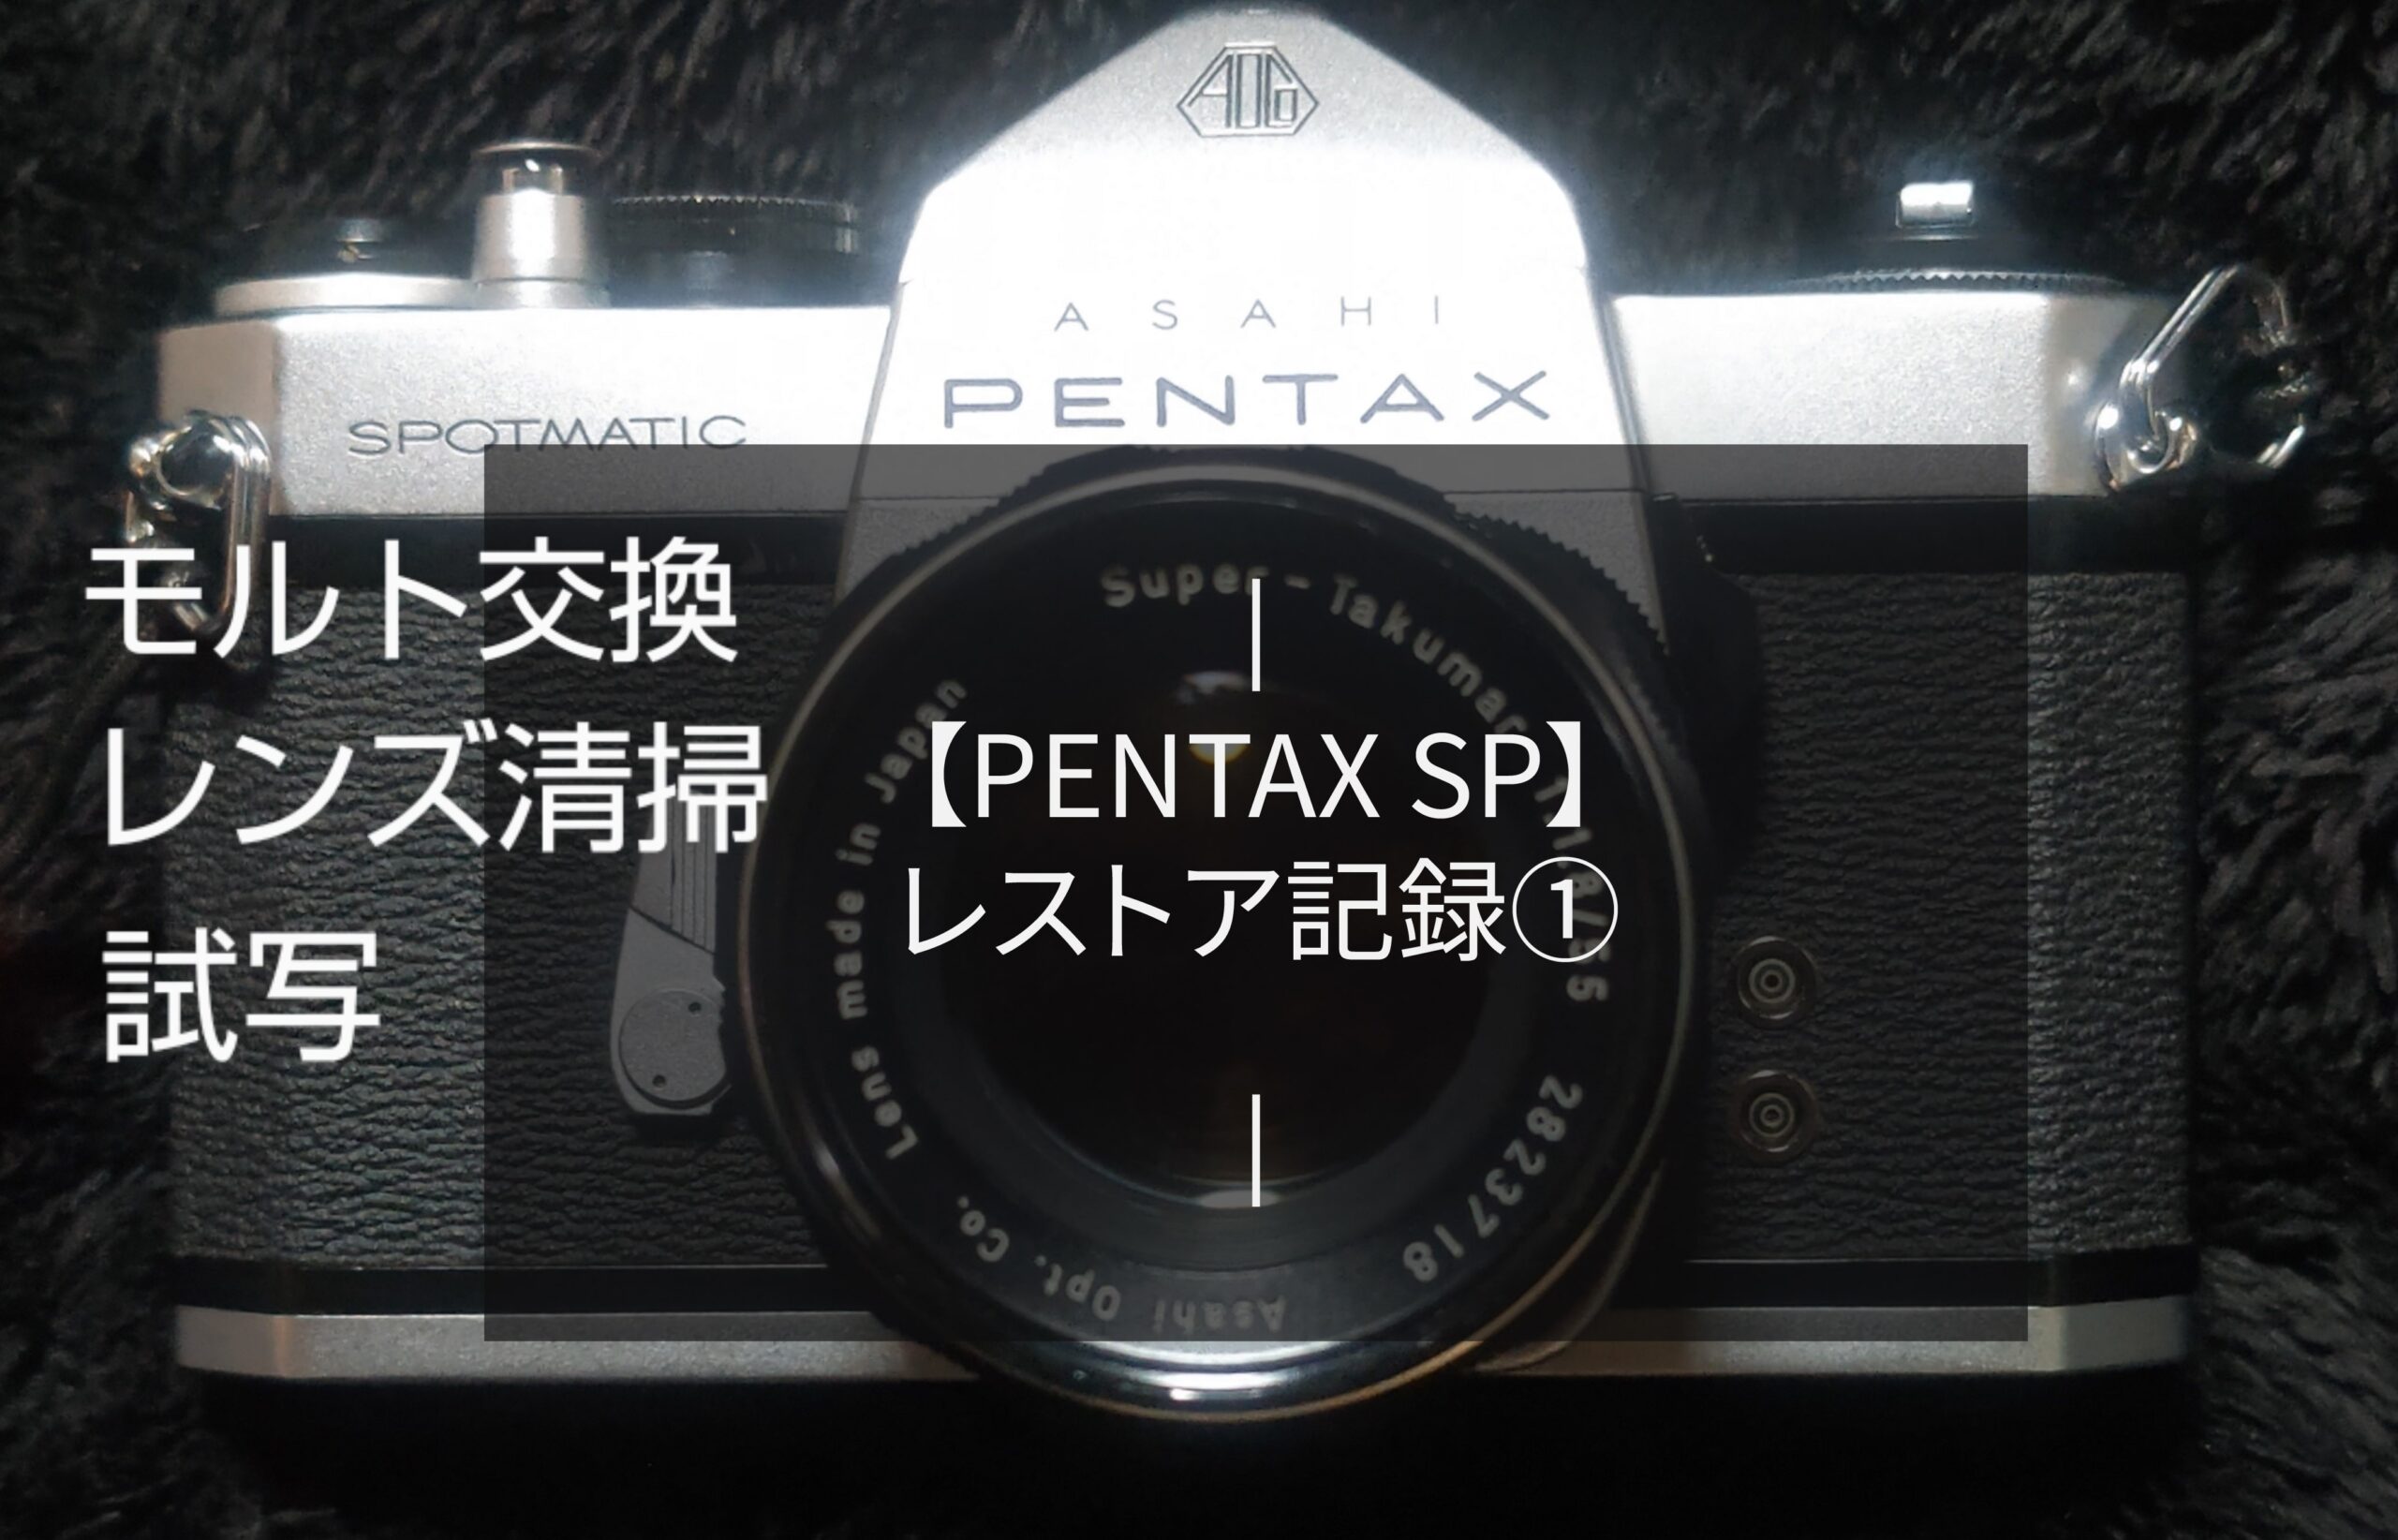 PENTAX SP】レストア記録① 【モルト交換、レンズ清掃、試写 ...